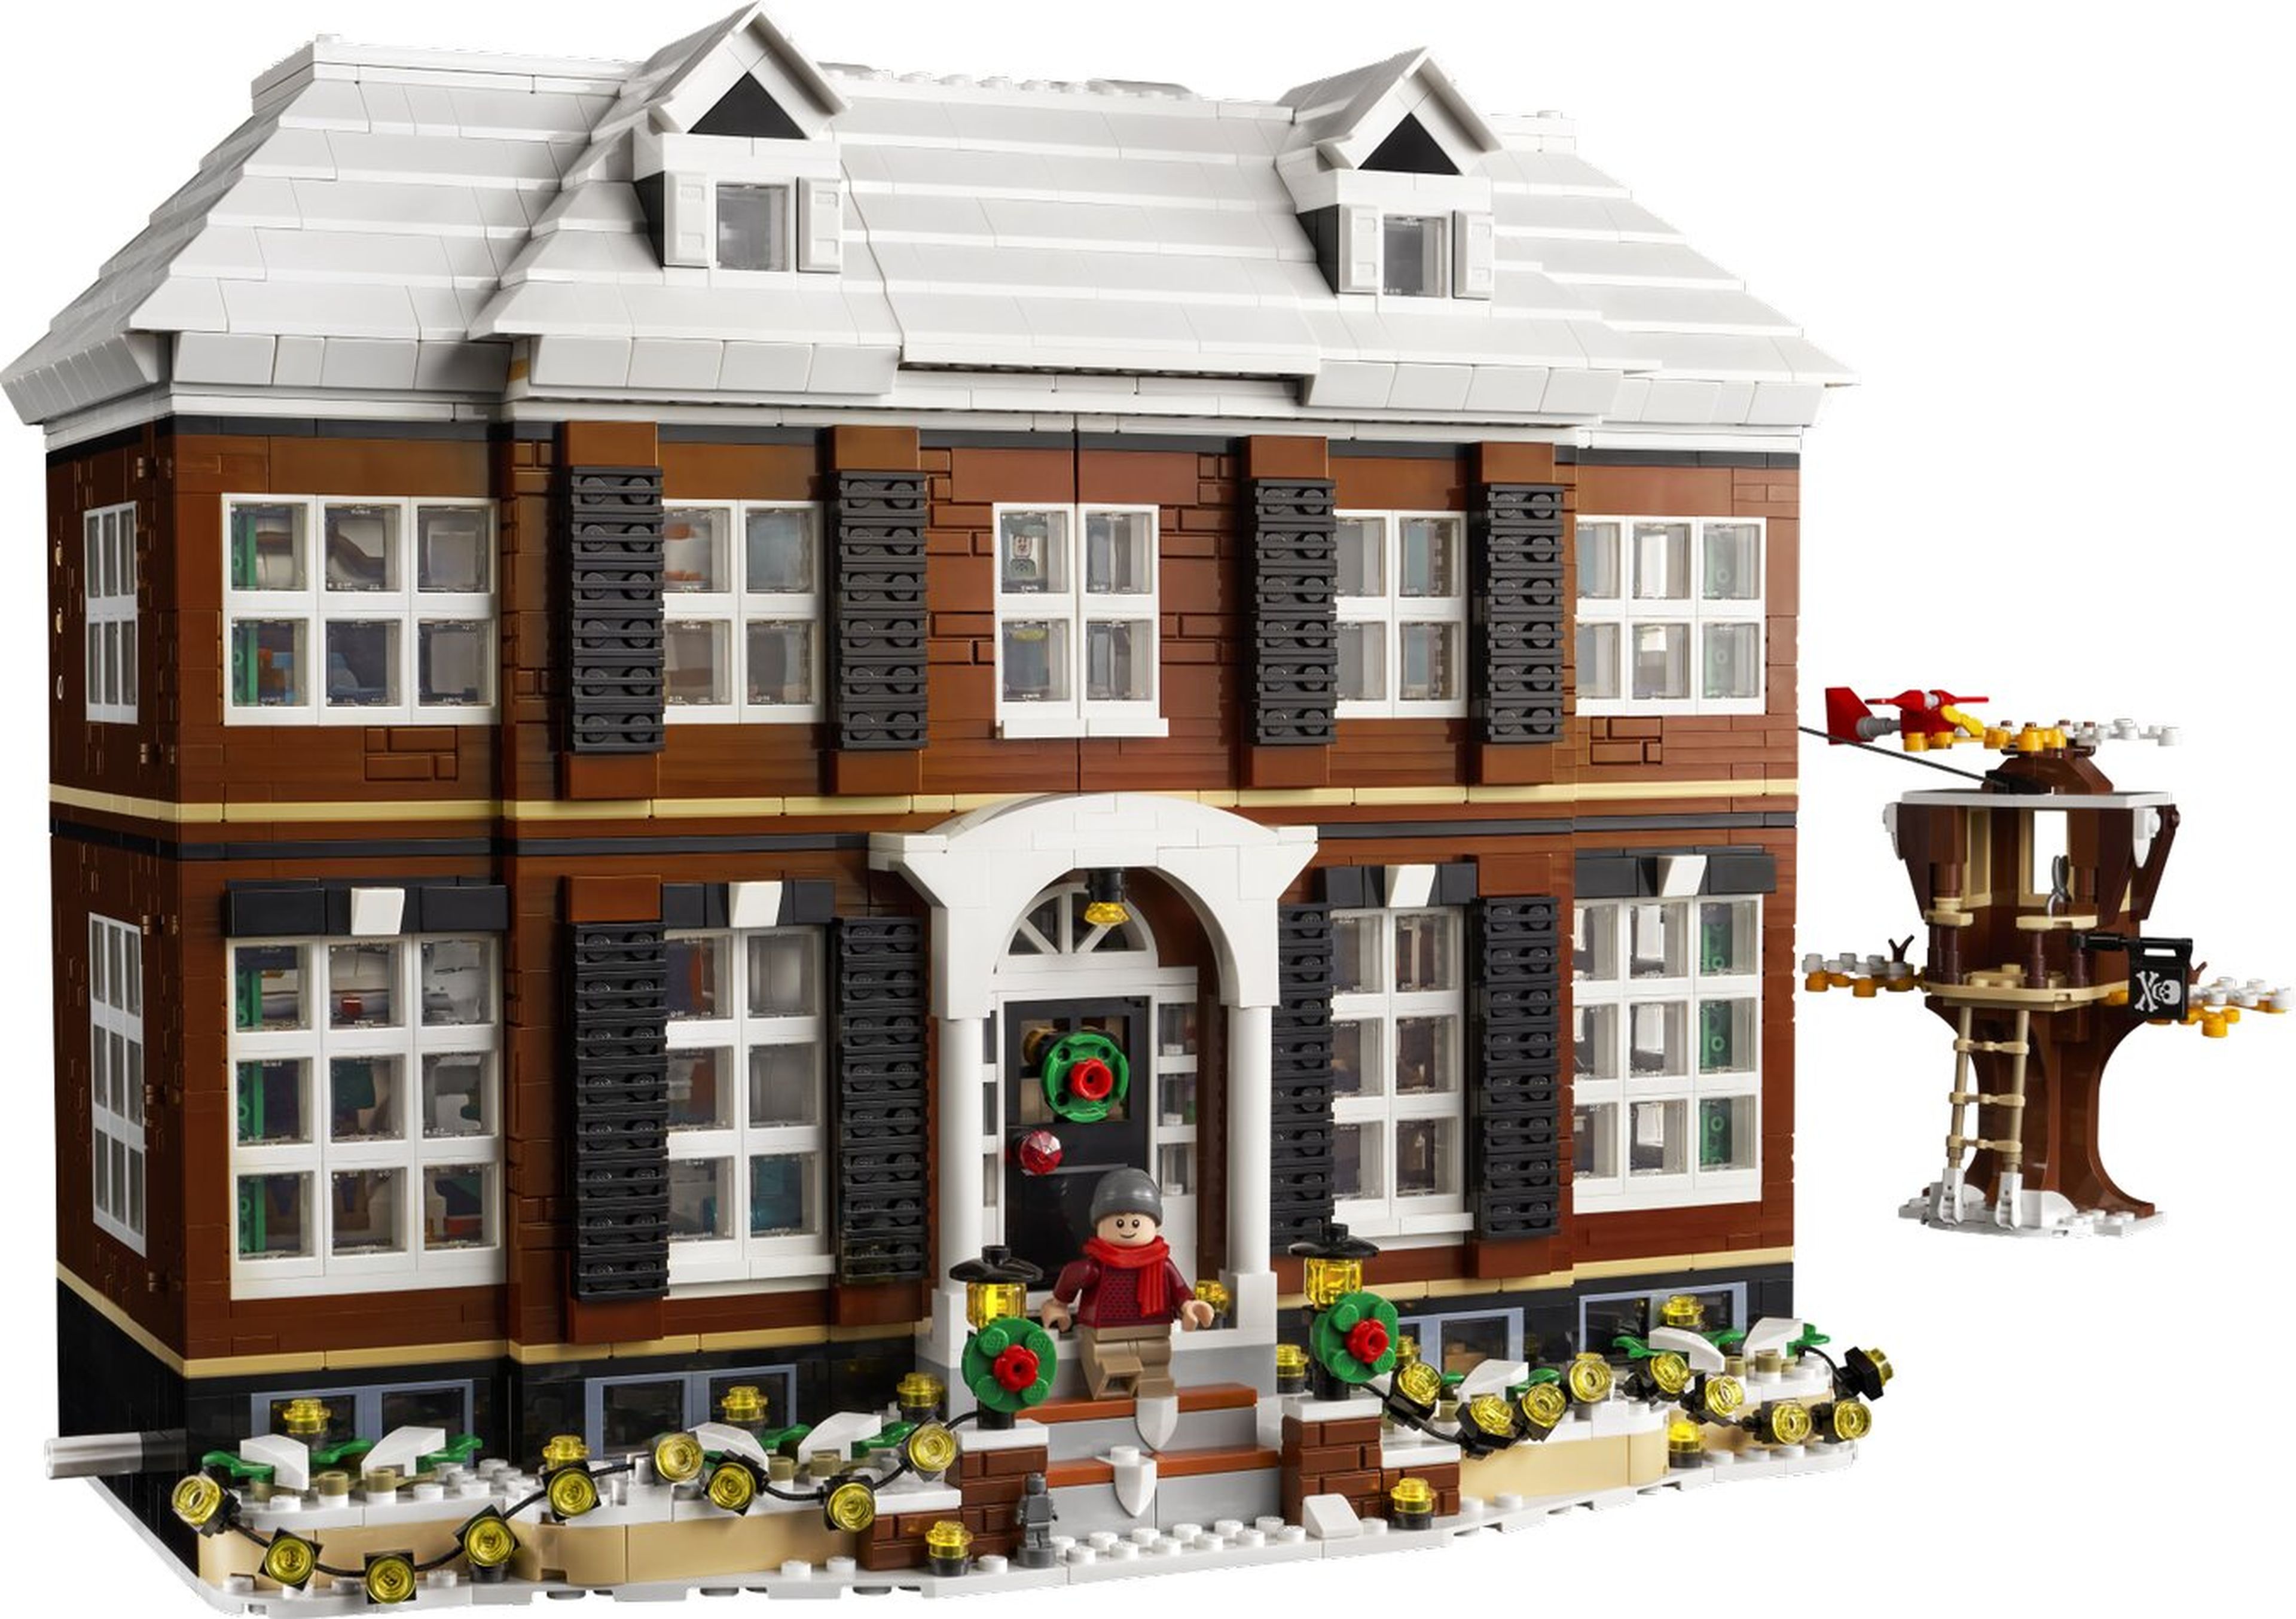 Set de LEGO de la emblemática película 'Solo en casa'.